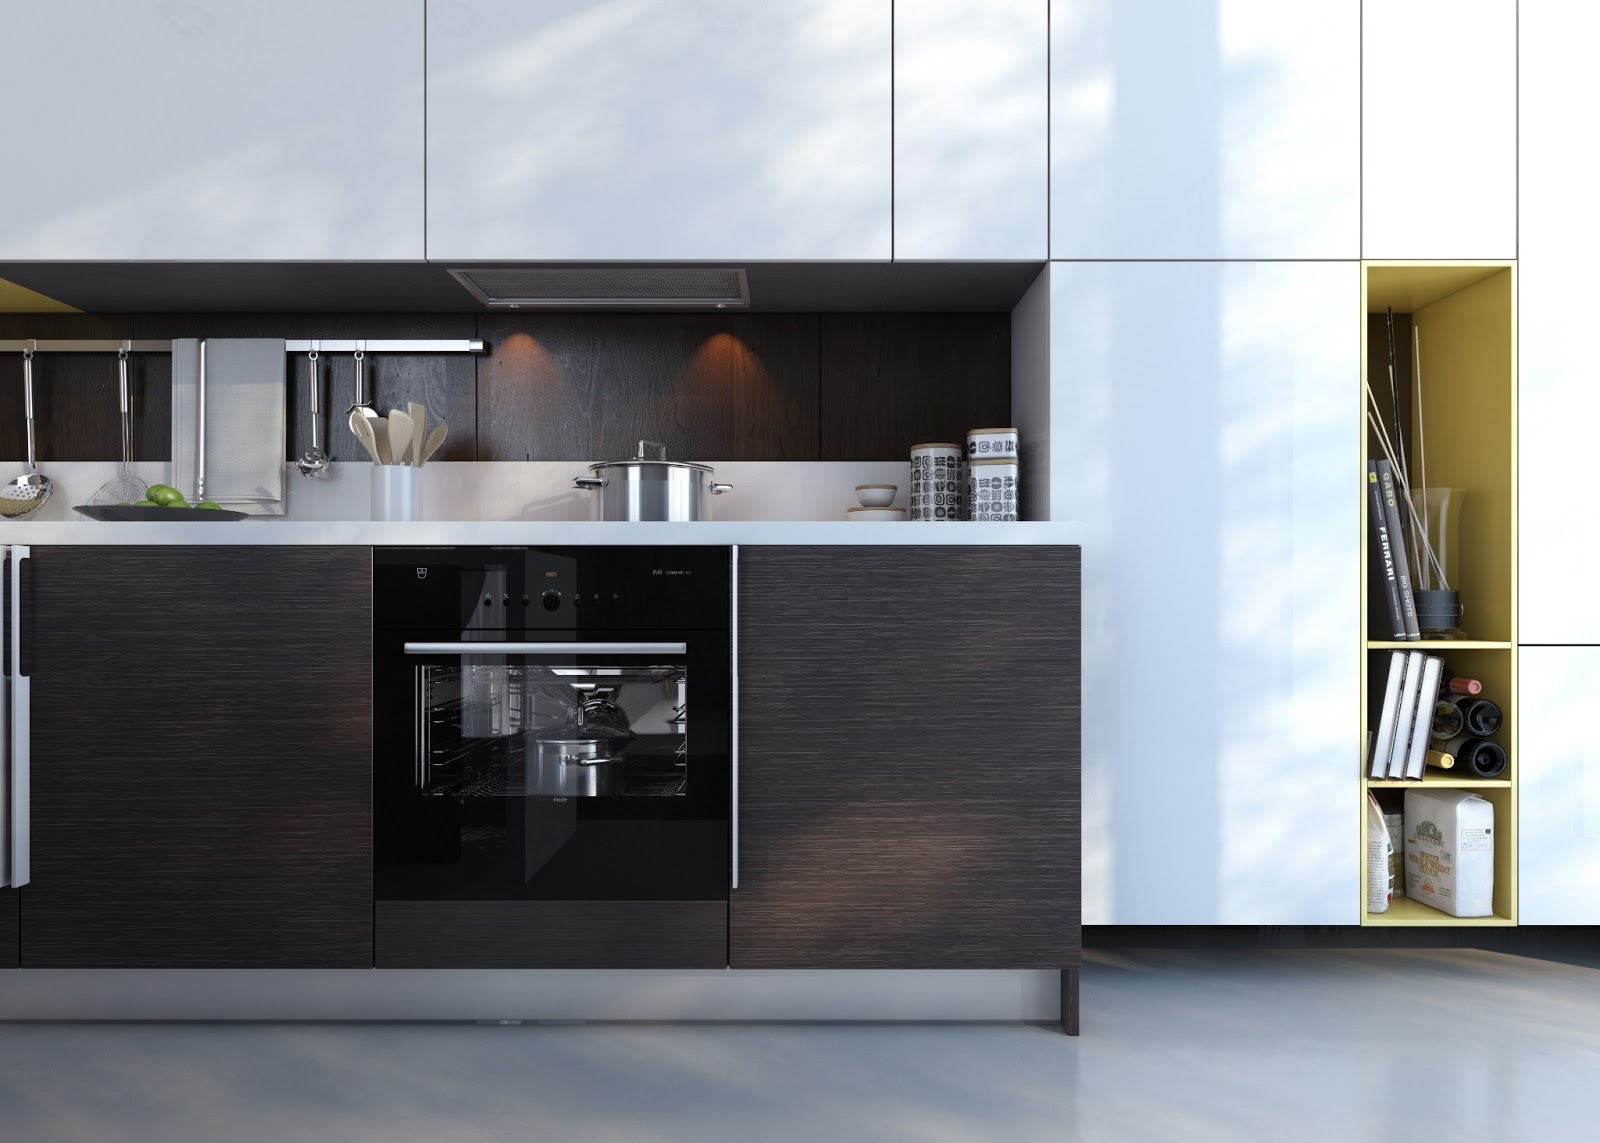 Ideas for minimalist kitchen design "width =" 1600 "height =" 1143 "srcset =" https://mileray.com/wp-content/uploads/2020/05/1588512727_688_2-Minimalist-Kitchen-Design-That-Will-Stunning-You-By-Artem.jpeg 1600w, https: / /mileray.com/wp-content/uploads/2016/06/4-White-kitchen-units-300x214.jpeg 300w, https://mileray.com/wp-content/uploads/2016/06/4-White- Kitchen units-768x549.jpeg 768w, https://mileray.com/wp-content/uploads/2016/06/4-White-kitchen-units-1024x732.jpeg 1024w, https://mileray.com/wp- content / uploads / 2016/06 / 4-White-Kitchen-Units-100x70.jpeg 100w, https://mileray.com/wp-content/uploads/2016/06/4-White-kitchen-units-696x497.jpeg 696w, https://mileray.com/wp-content/uploads/2016/06/4-White-kitchen-units-1068x763.jpeg 1068w, https://mileray.com/wp-content/uploads/2016/06 / 4 -White-kitchen-units-588x420.jpeg 588w "sizes =" (maximum width: 1600px) 100vw, 1600px